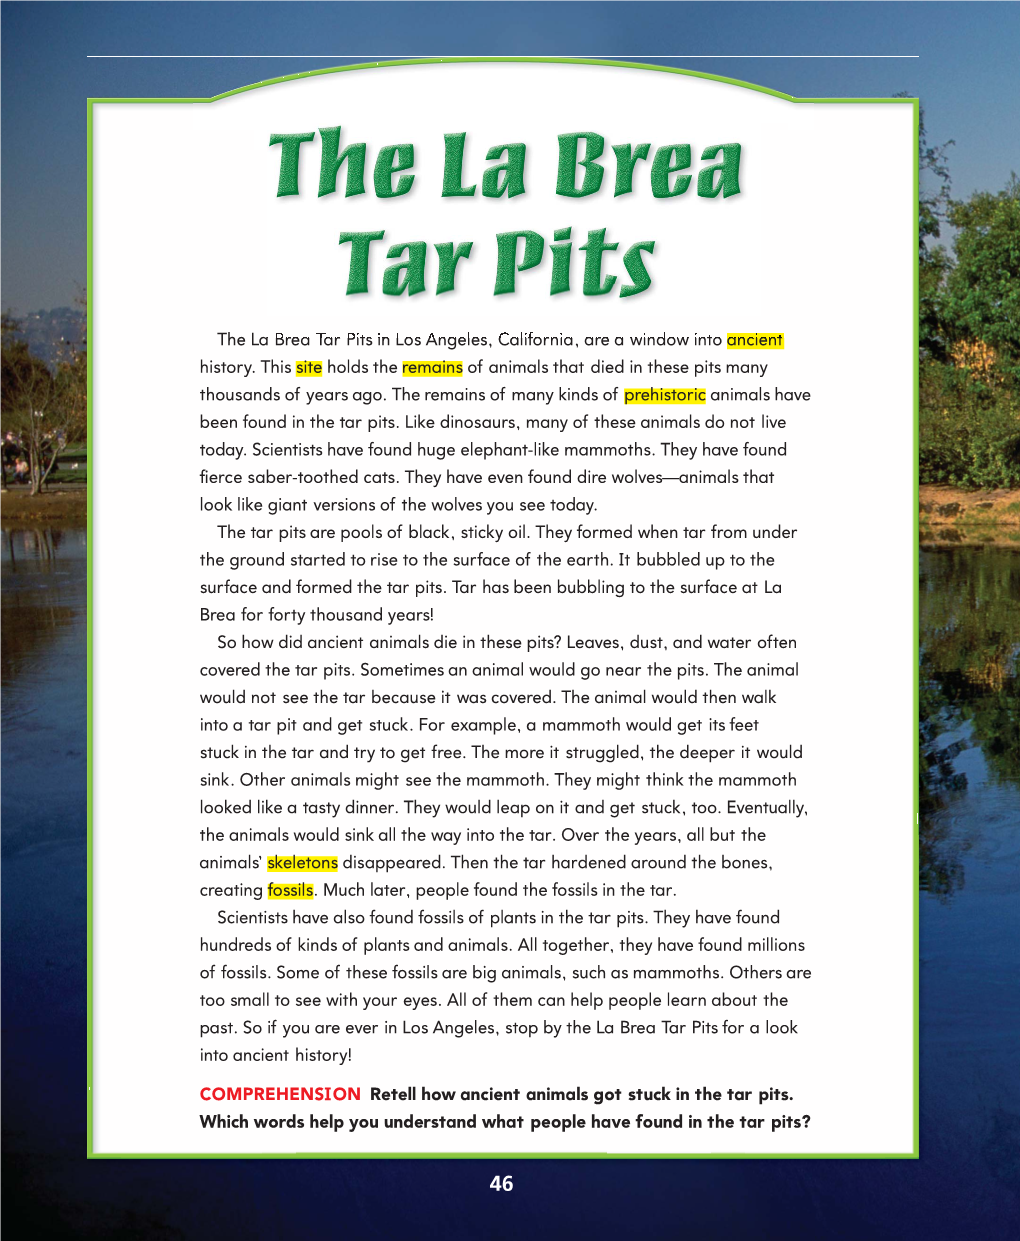 The La Brea Tar Pits in Los Angeles, California, Are a Window Into Ancient History